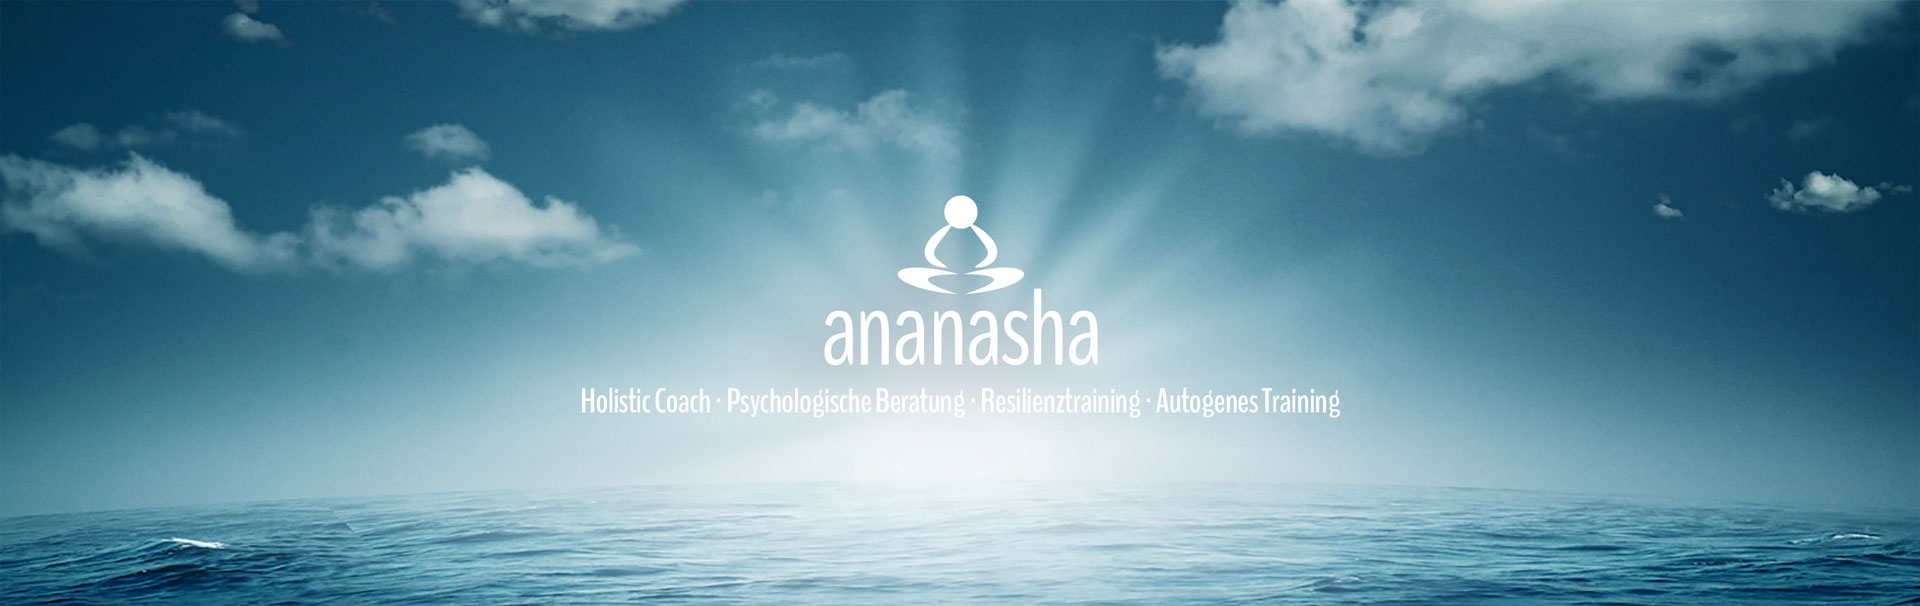 Ananasha Holstic Coach, Psychologische Beratung